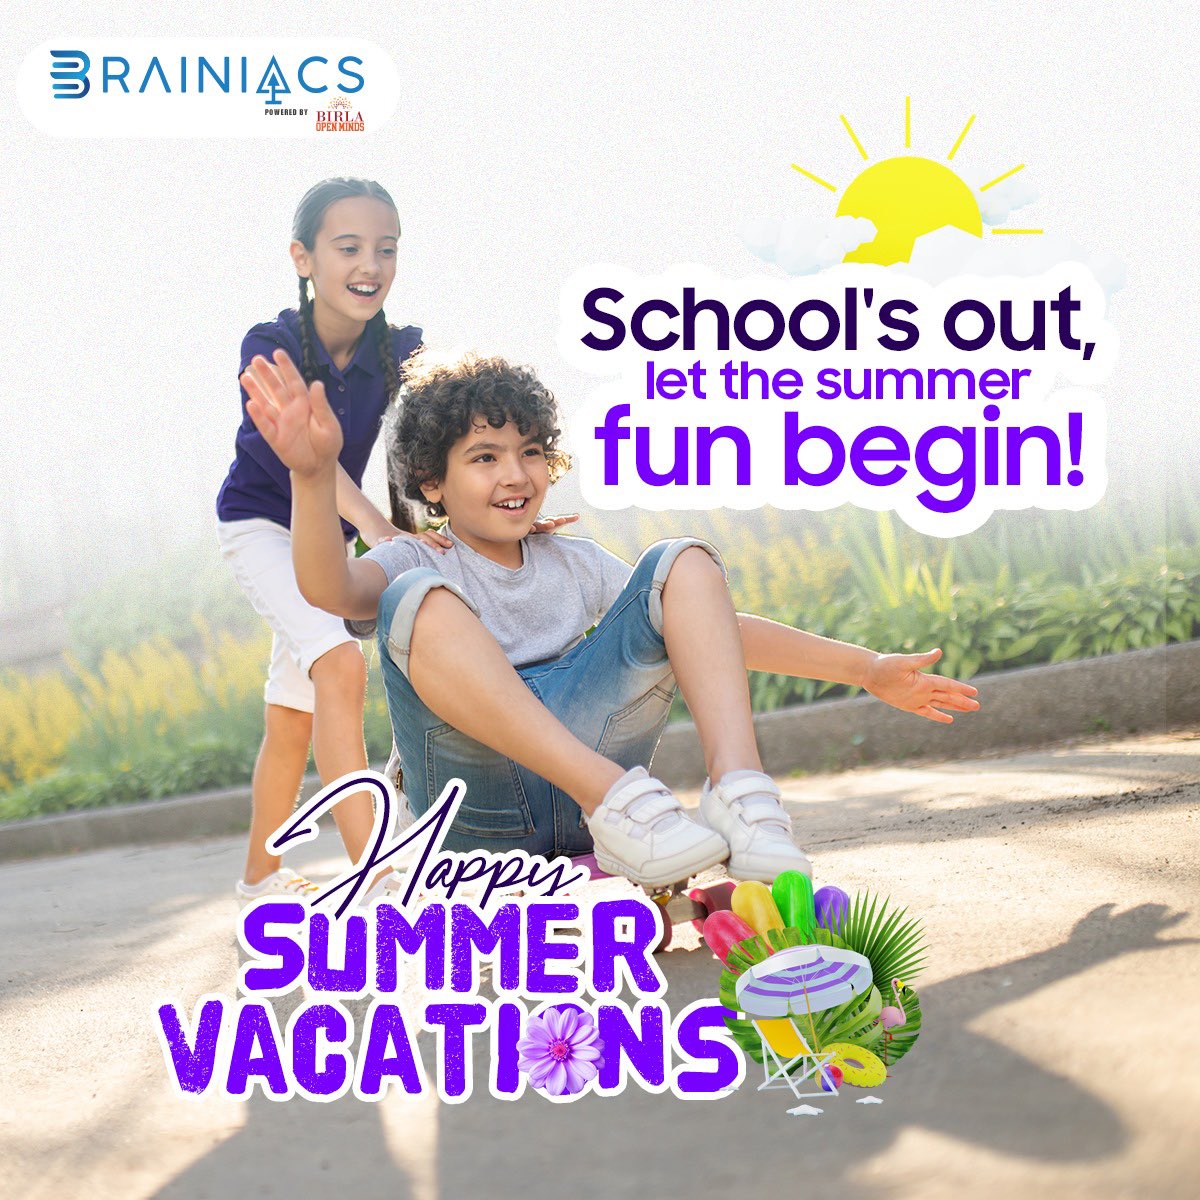 Happy Summer Vacations!   

#Brainiacs #BirlaBrainiacs #Brainiacsstudents #HybridLearning #Homeschooling #Brainiacstalents #Education #HybridEducation #CambridgeCurriculum #HolisticDevelopment #PadhneKaNayaTarika #StudentActivities #Sports #SummerVacations #SummerActivities